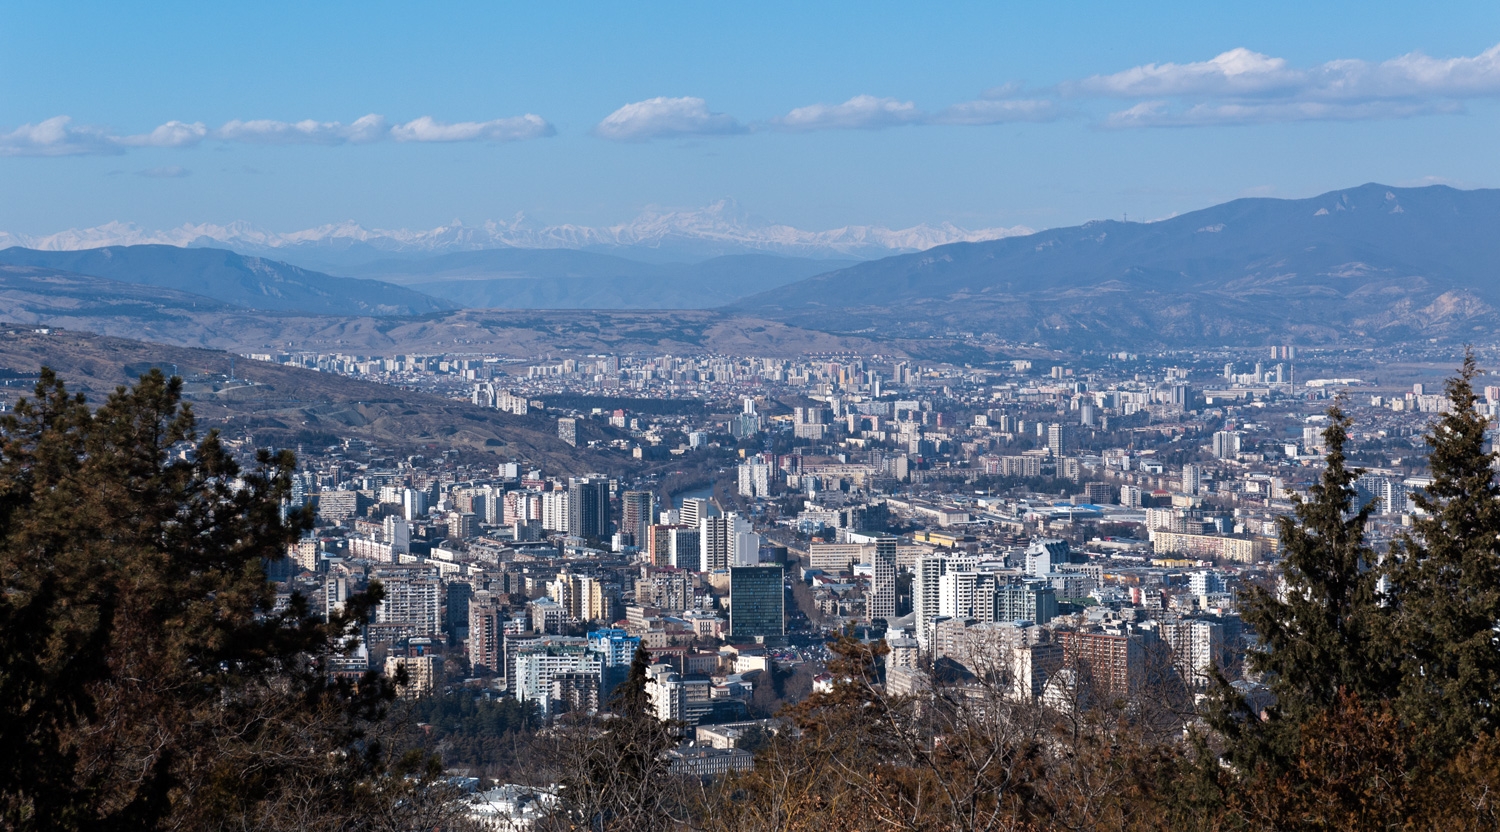 Overlooking Tbilisi